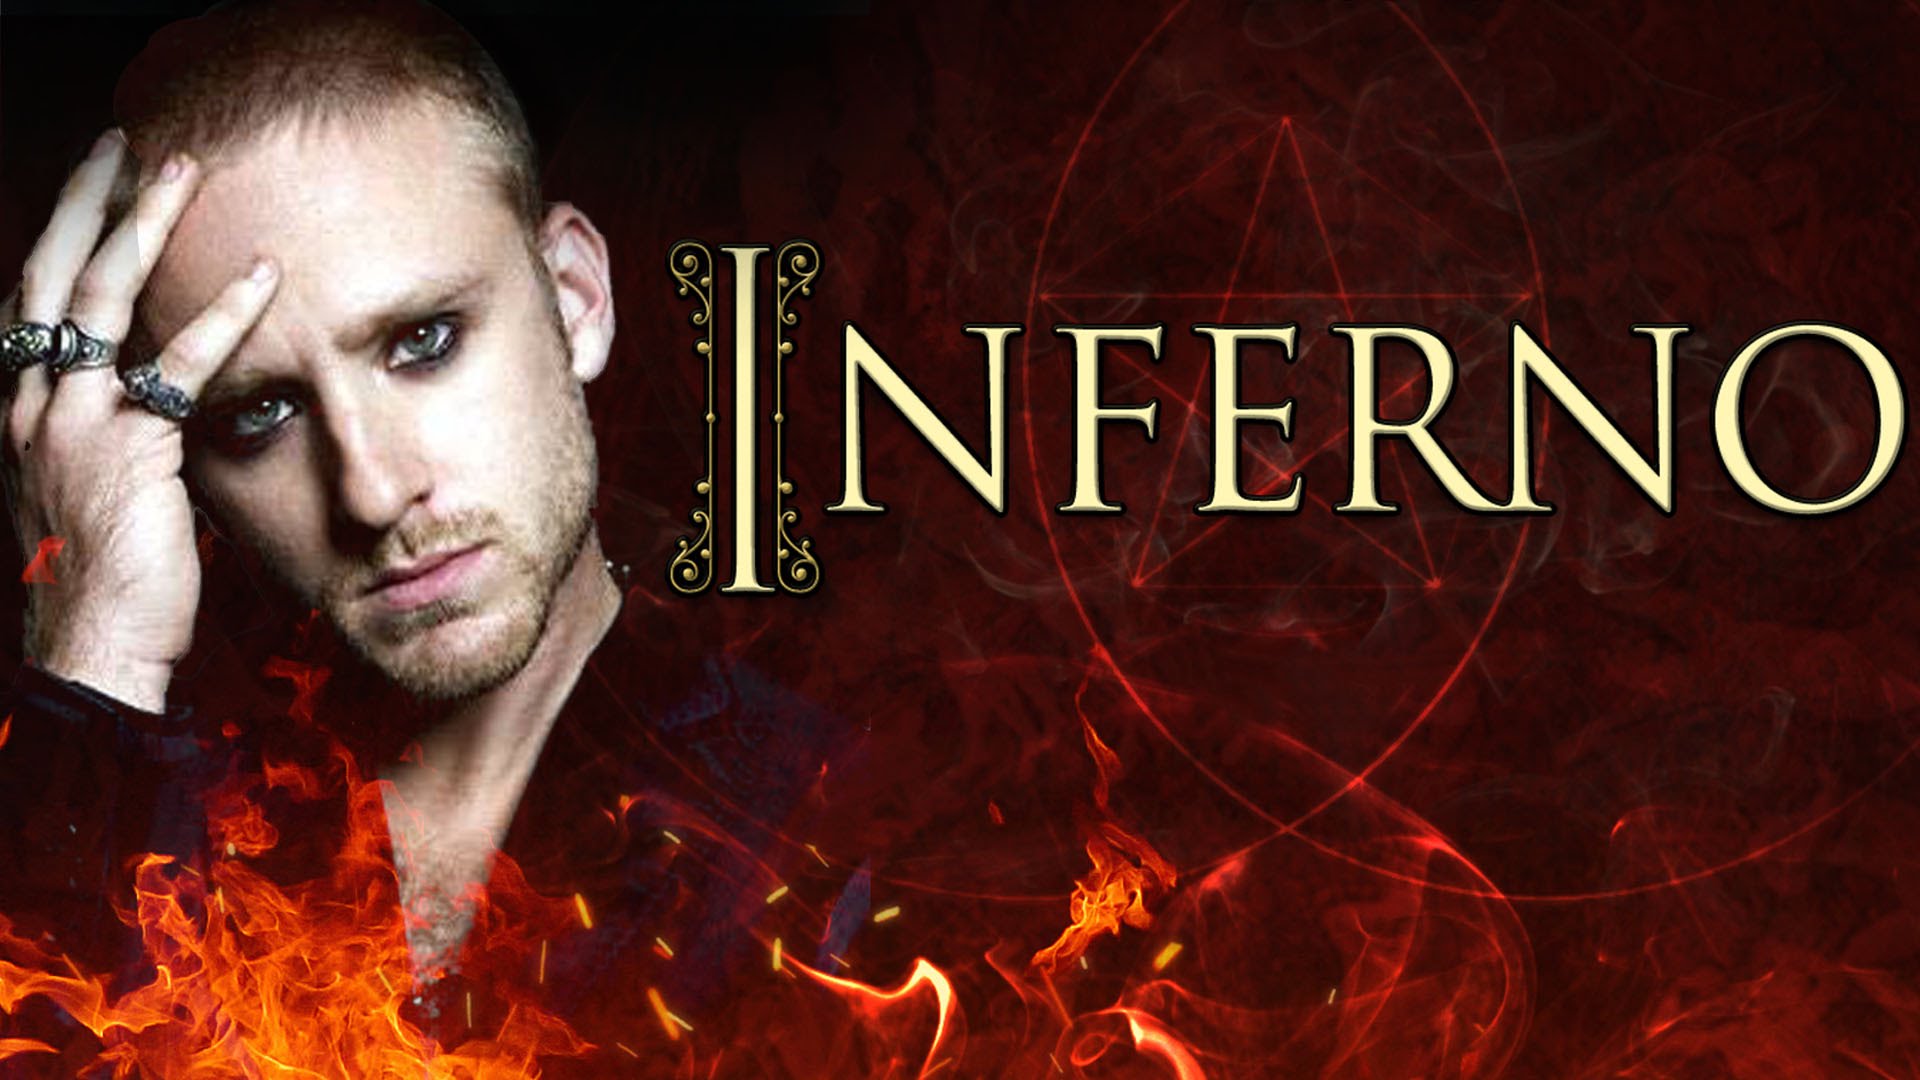 Online 2016 Inferno Full-Length Movie Watch